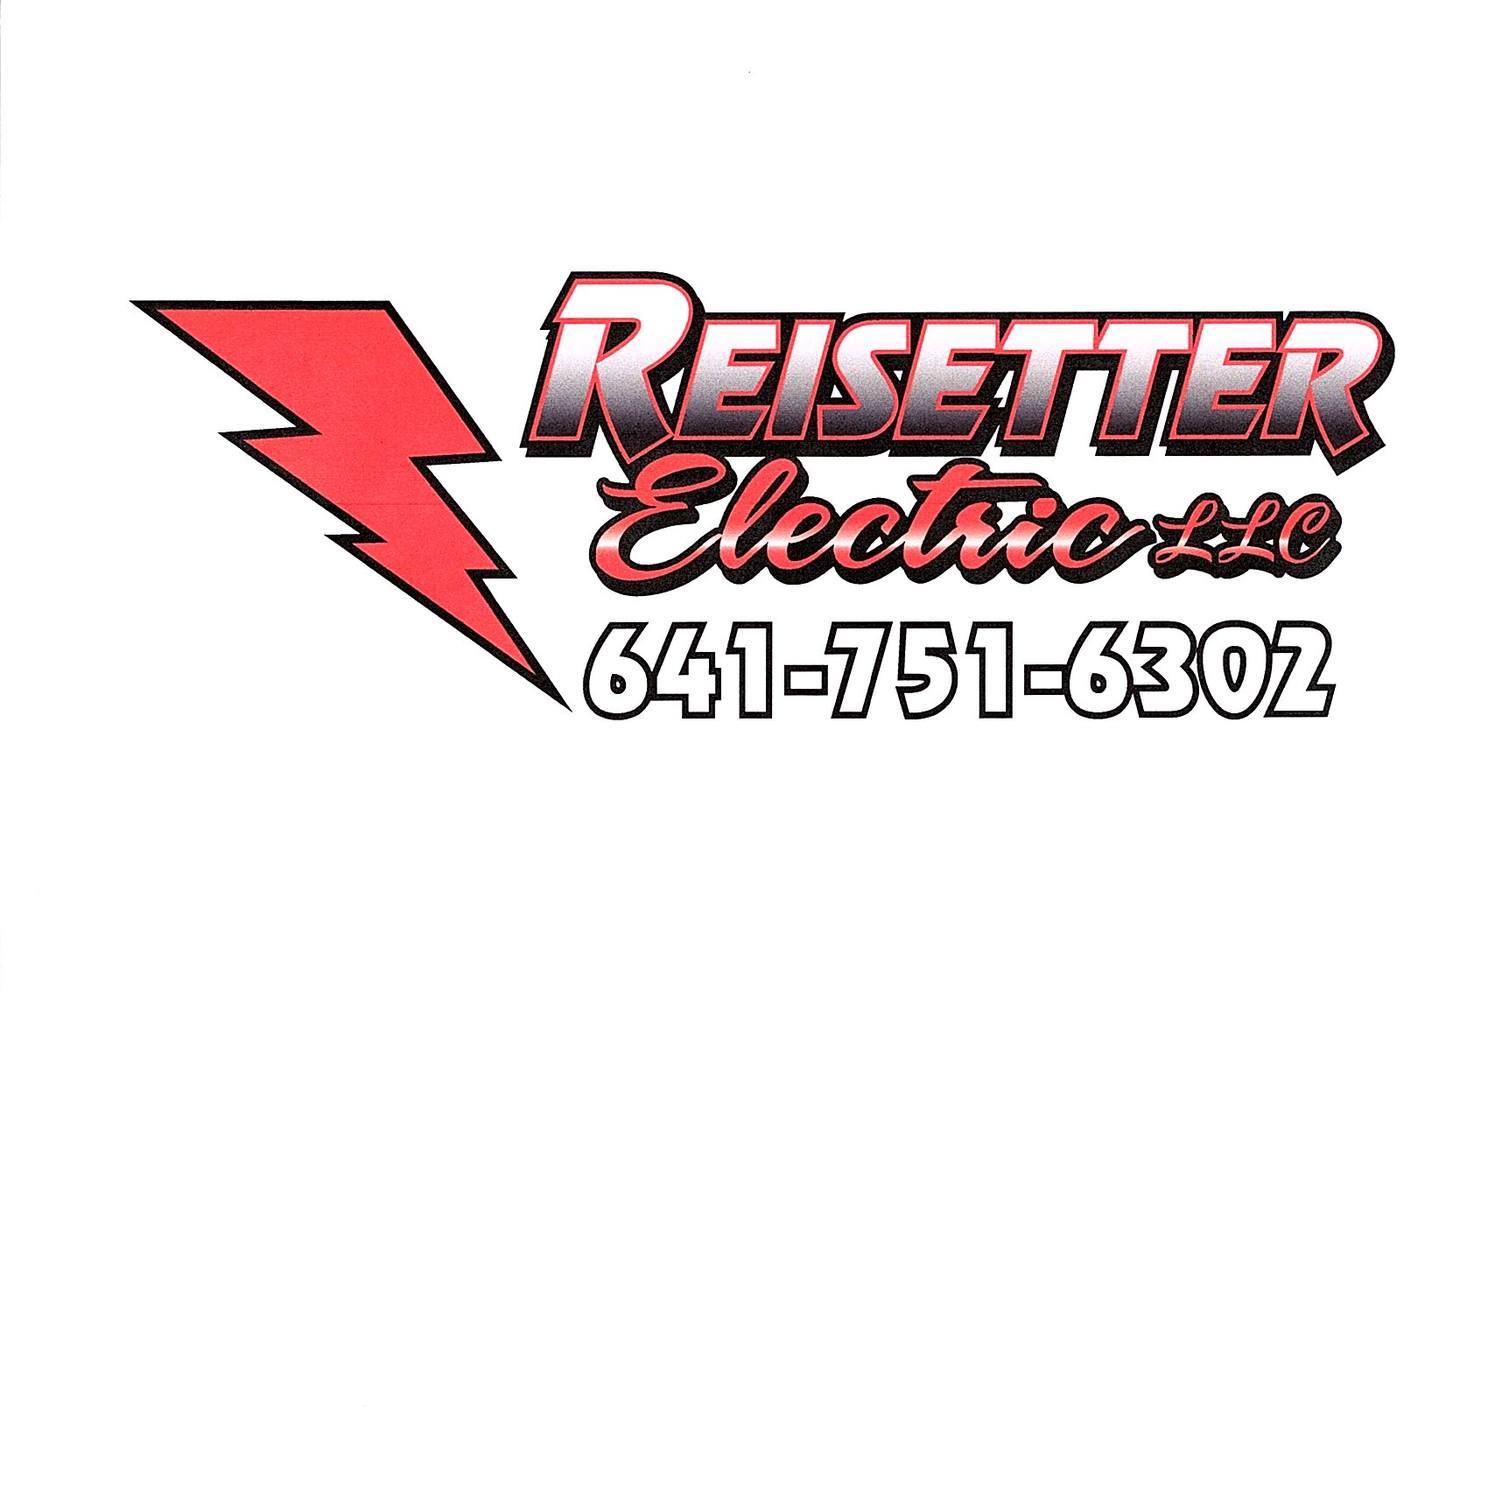 Reisetter Electric, LLC 806 Main St, Melbourne Iowa 50162